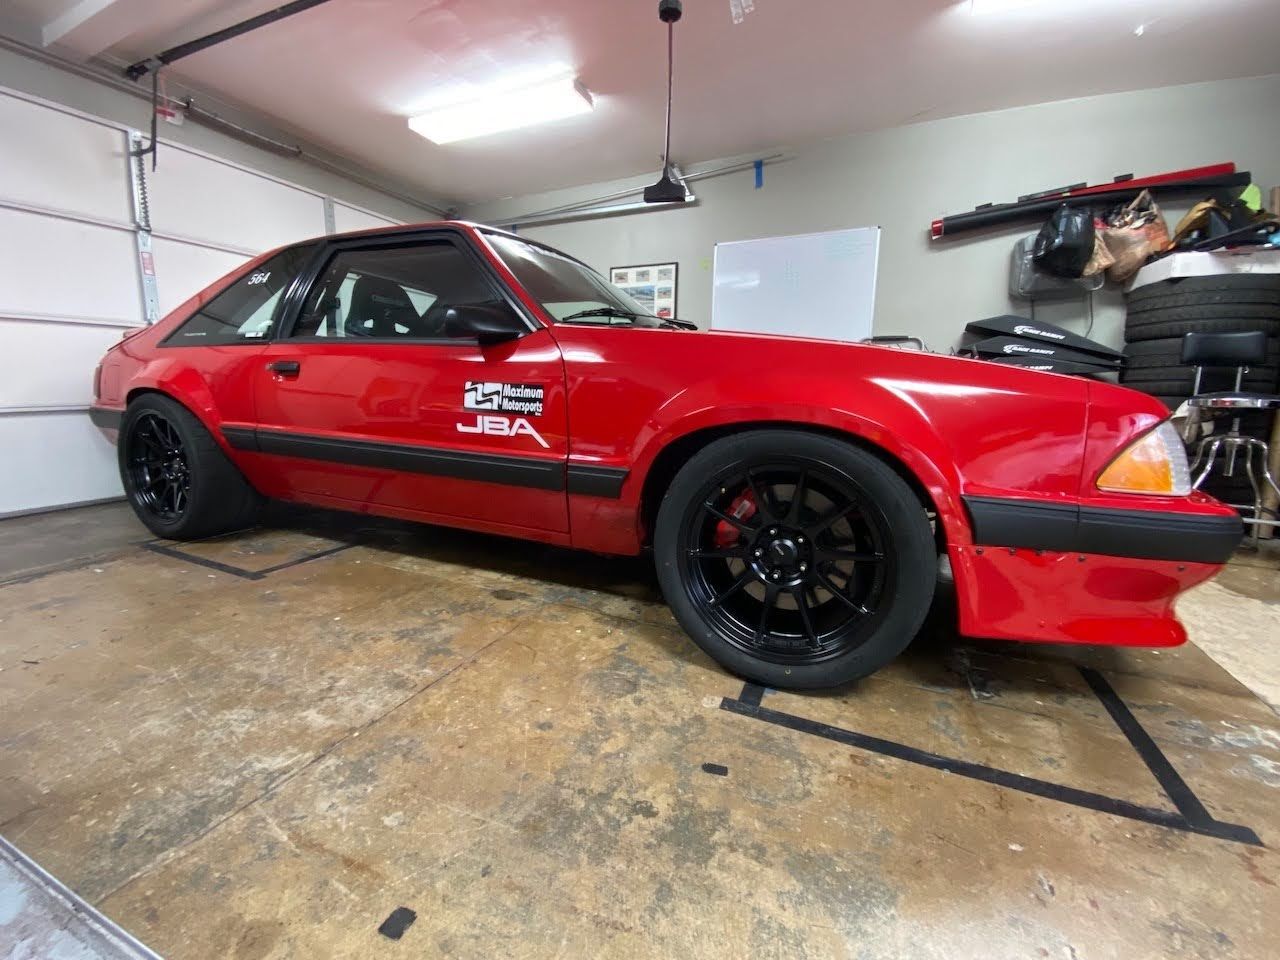 1992 Mustang
(Red Fox)